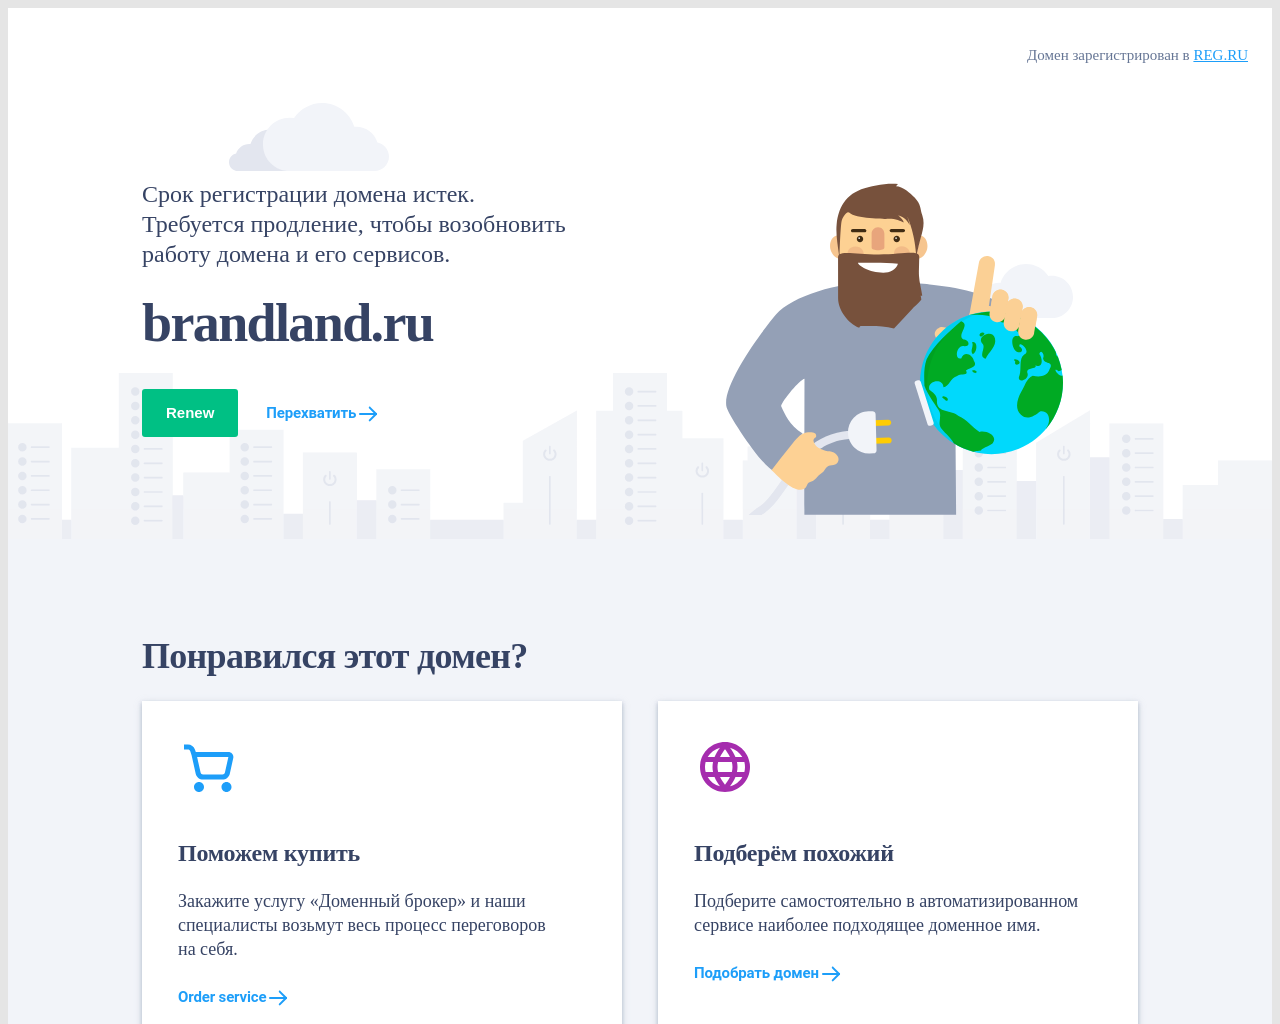 brandland.ru